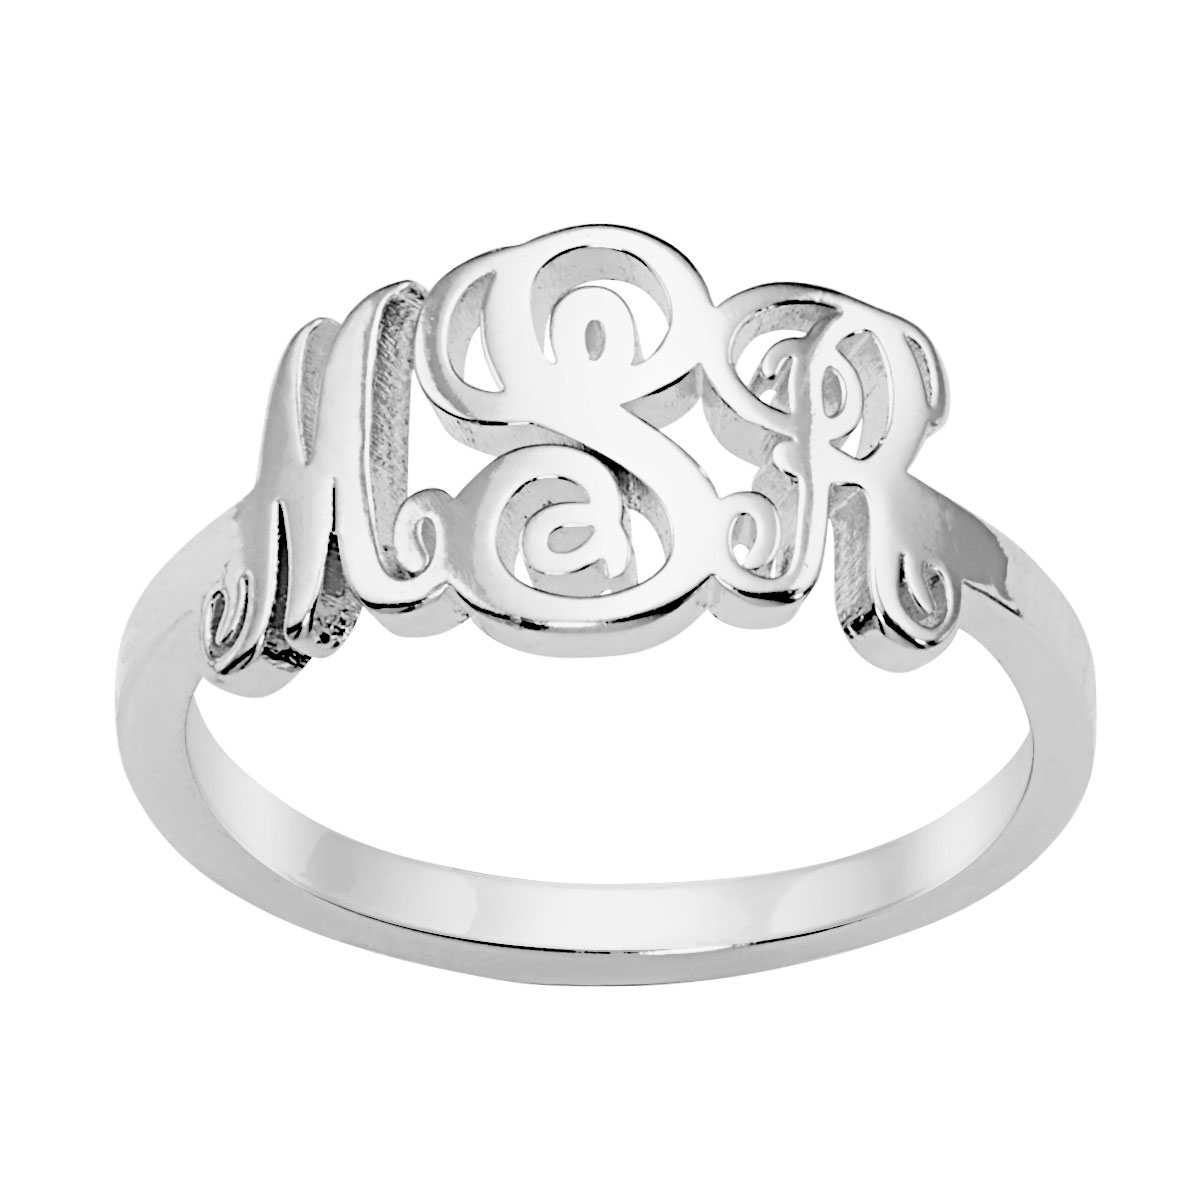 Silver Plated Petite Monogram Ring